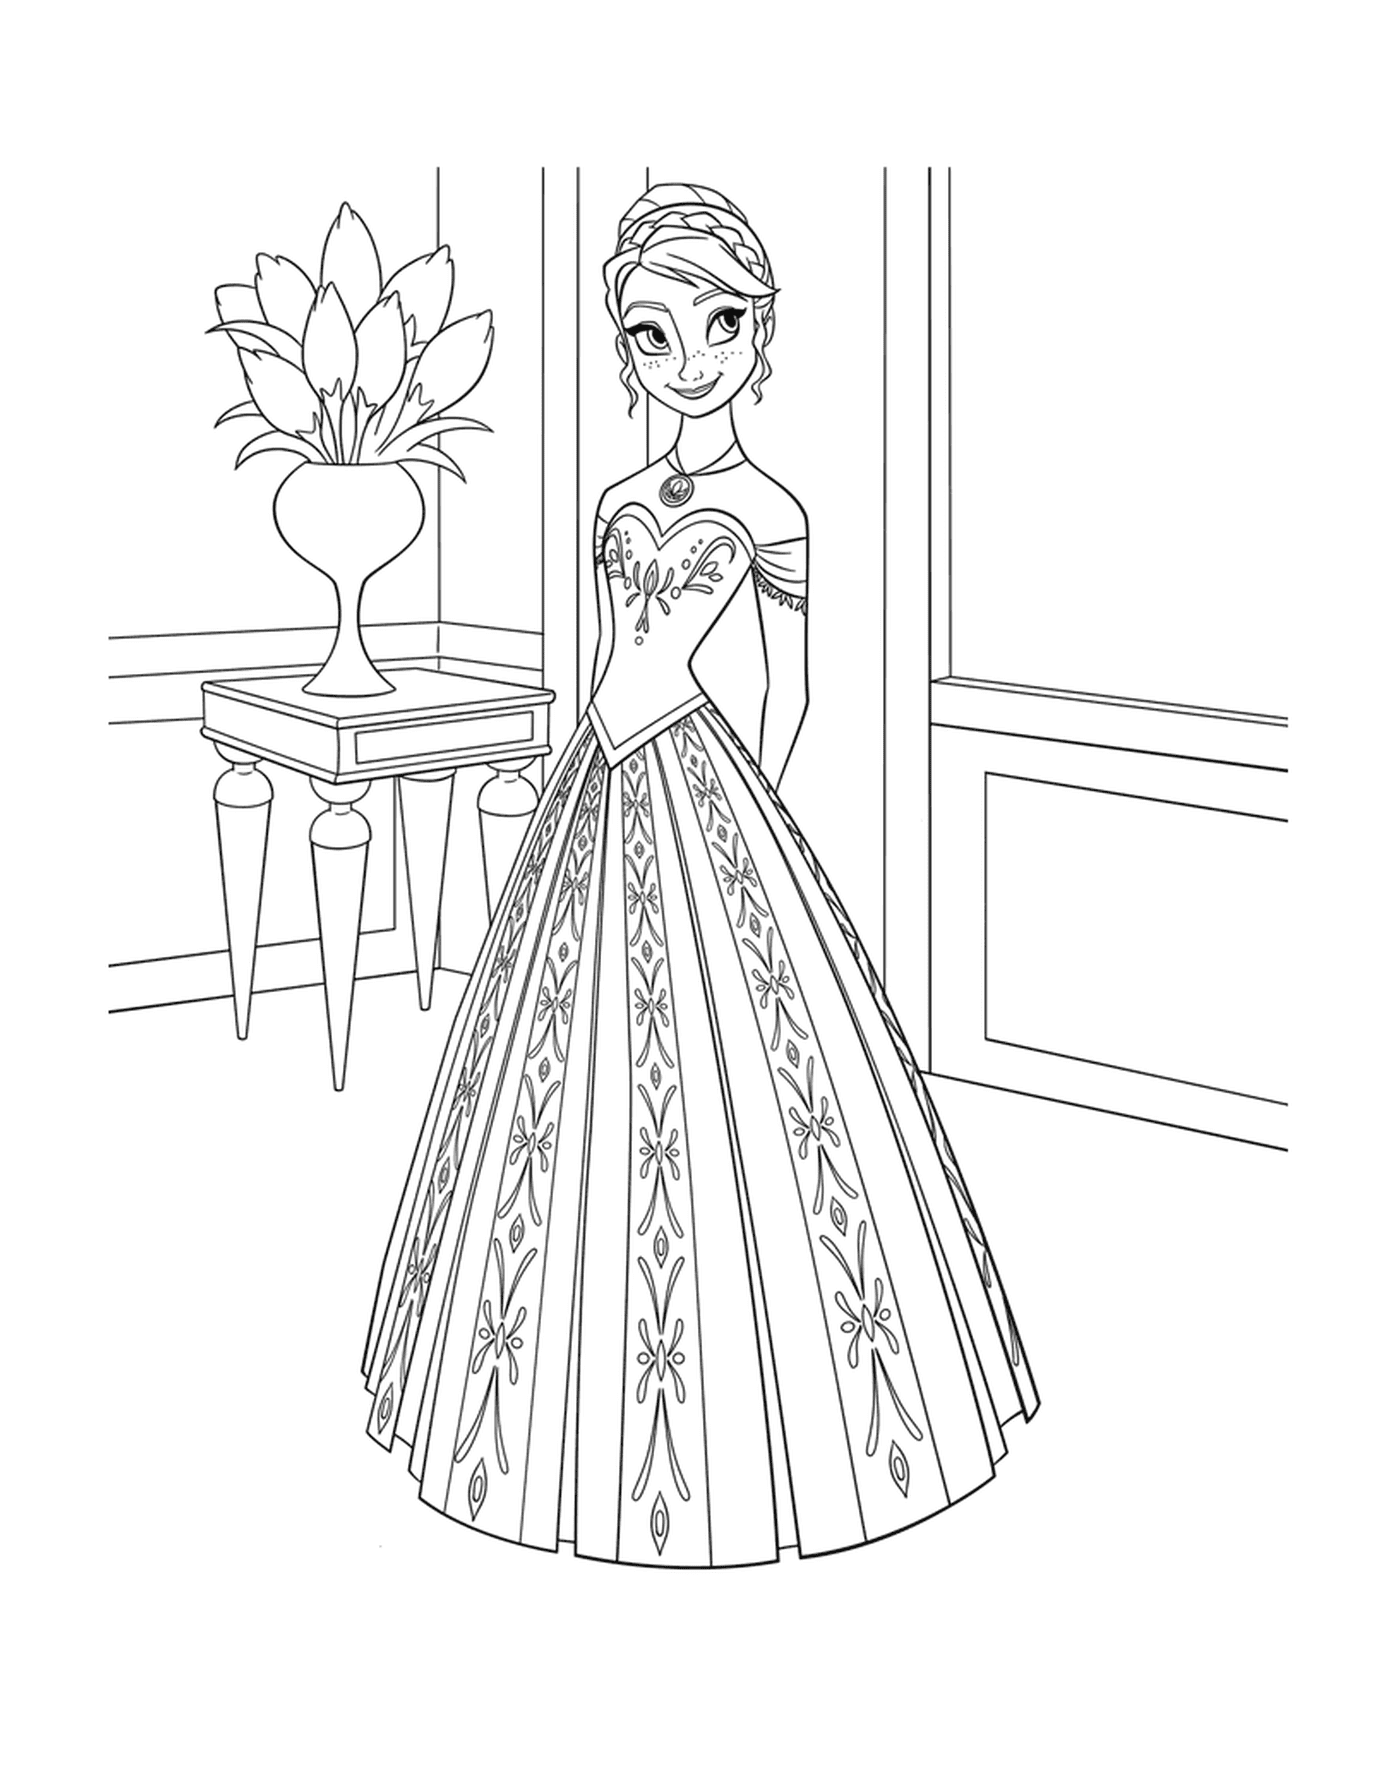  Elsa de La Reine des Neiges in a beautiful dress 